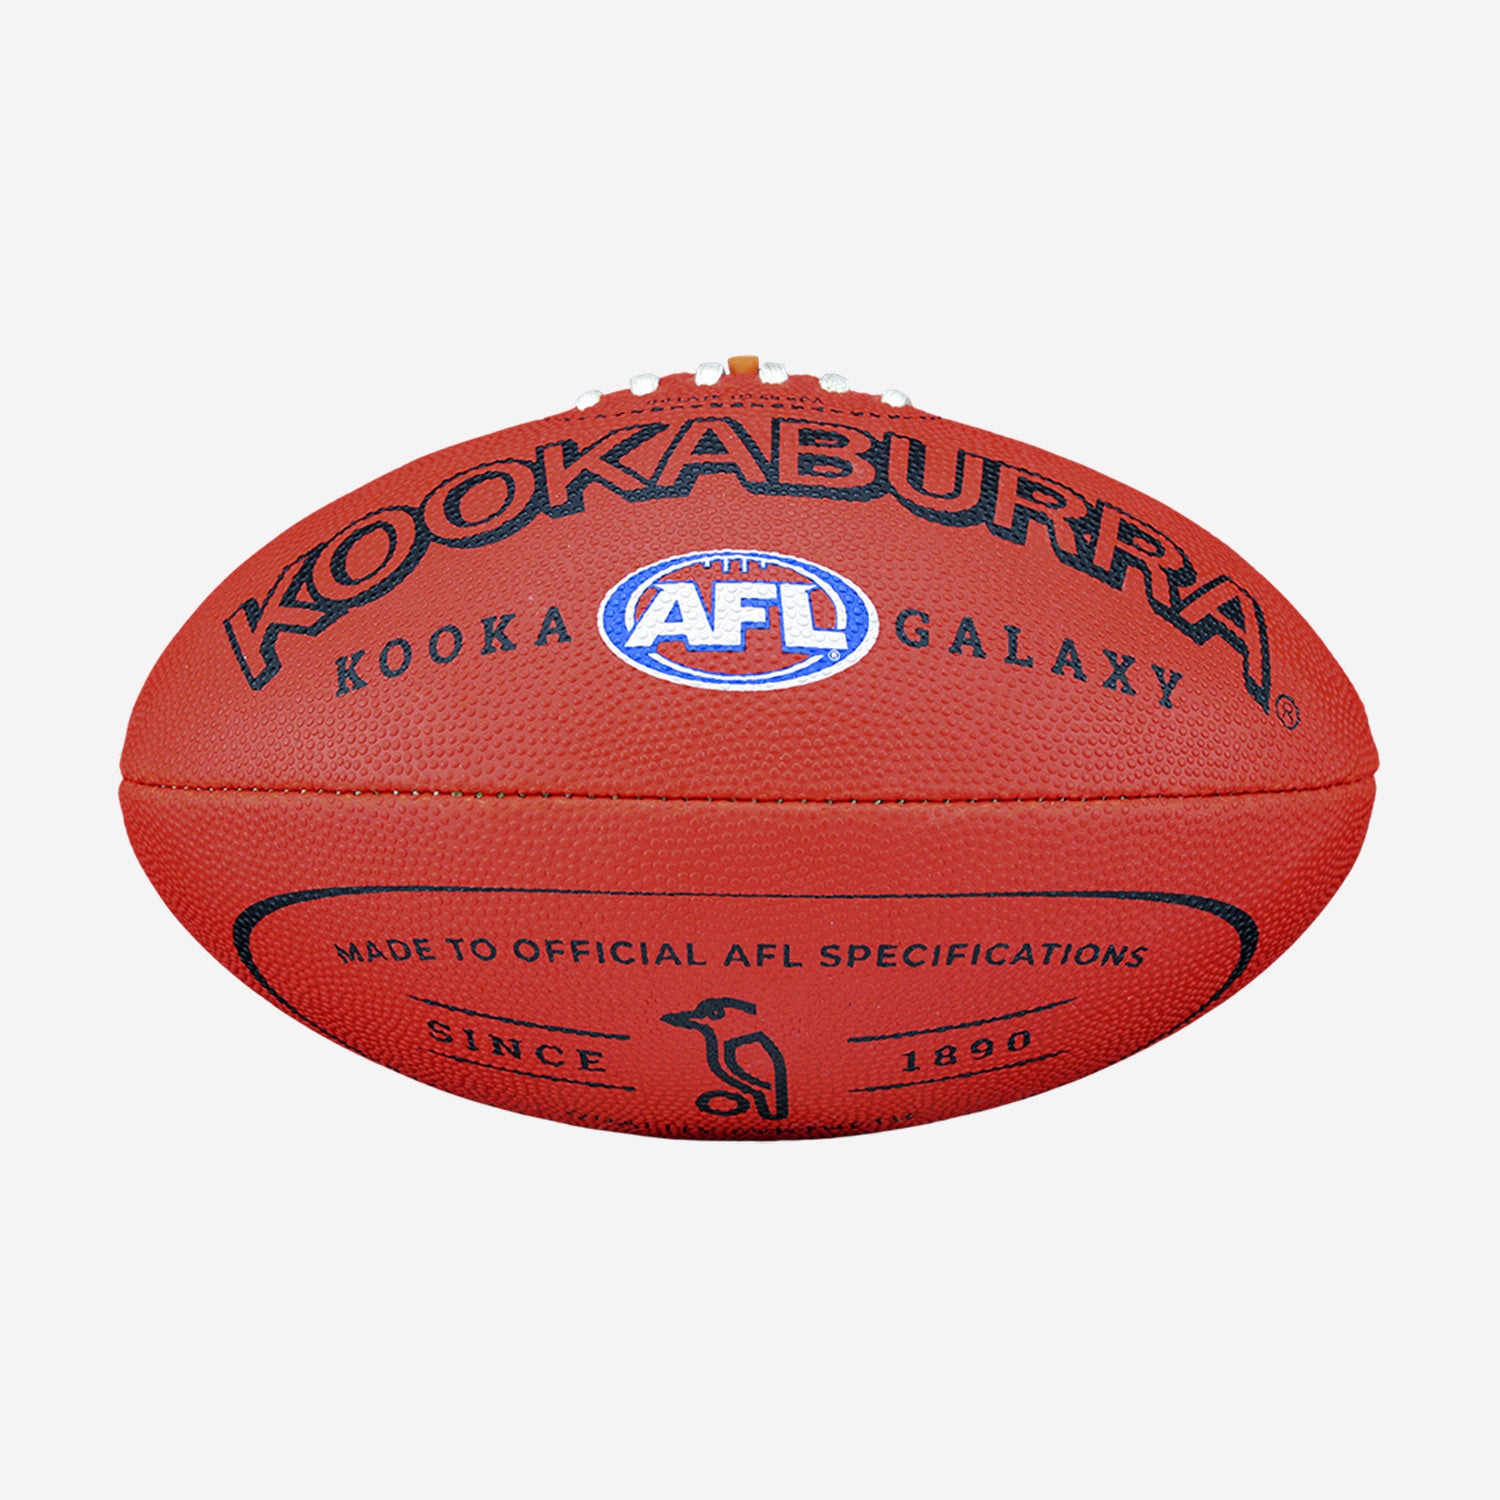 Kookaburra - Galaxy Aussie Rules Football